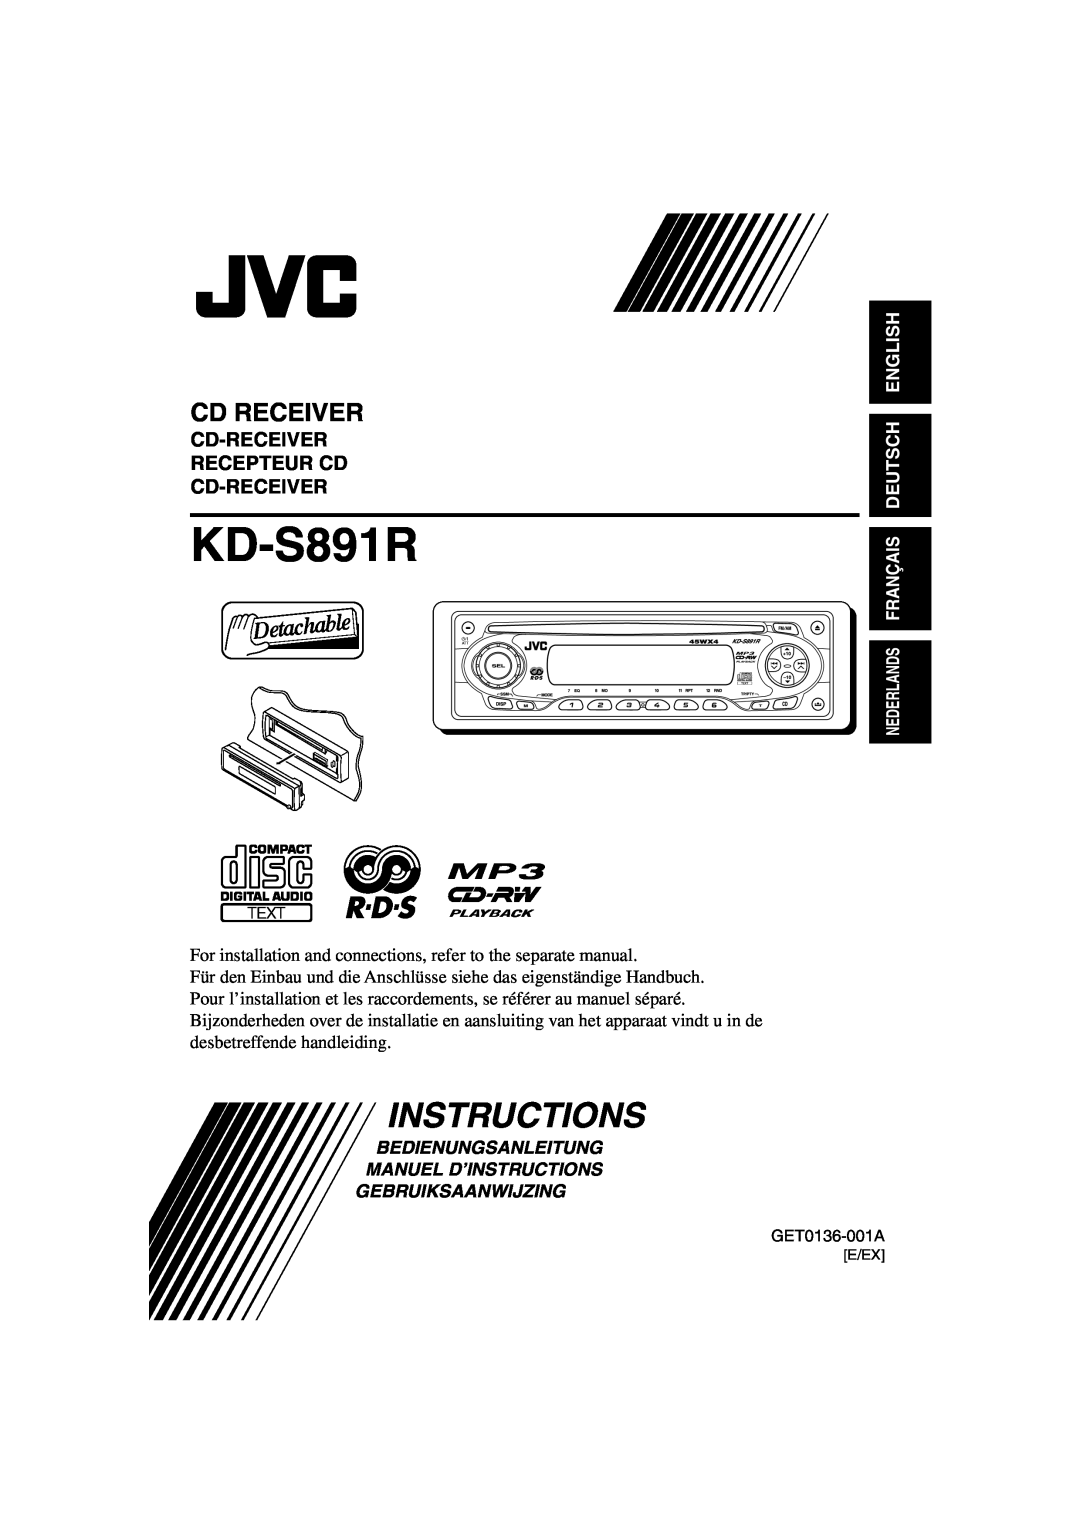 JVC KD-S891R manual Cd Receiver, Cd-Receiver Recepteur Cd Cd-Receiver, English Deutsch, Instructions 